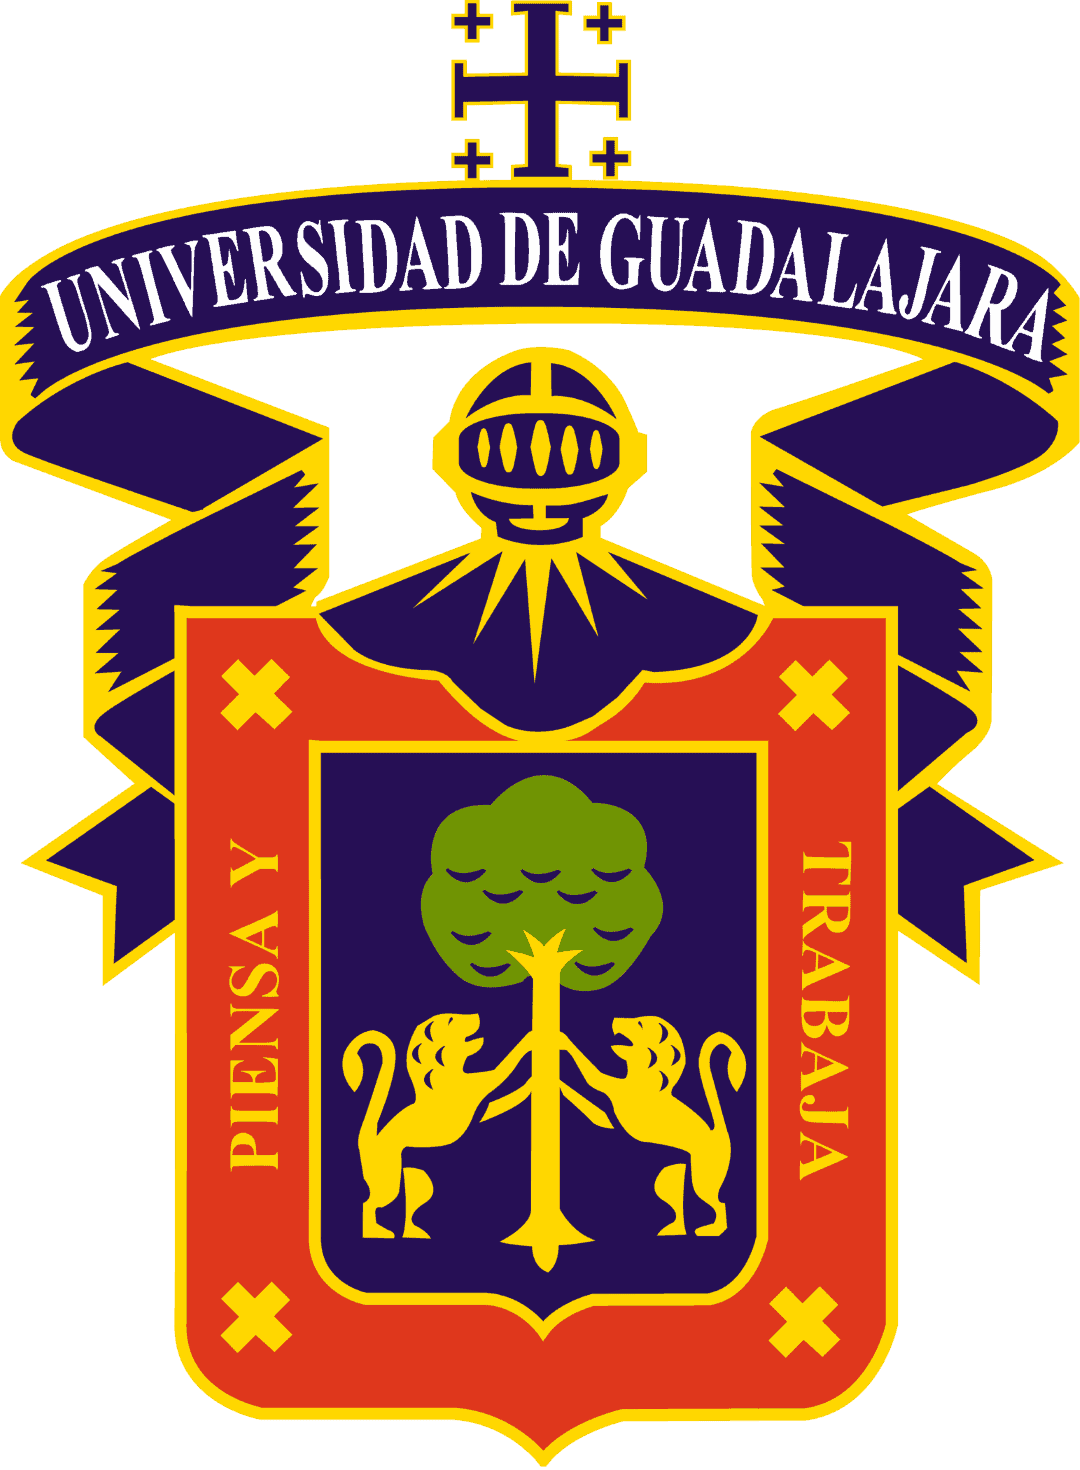 University of Guadalajara Logo logoeps.net 